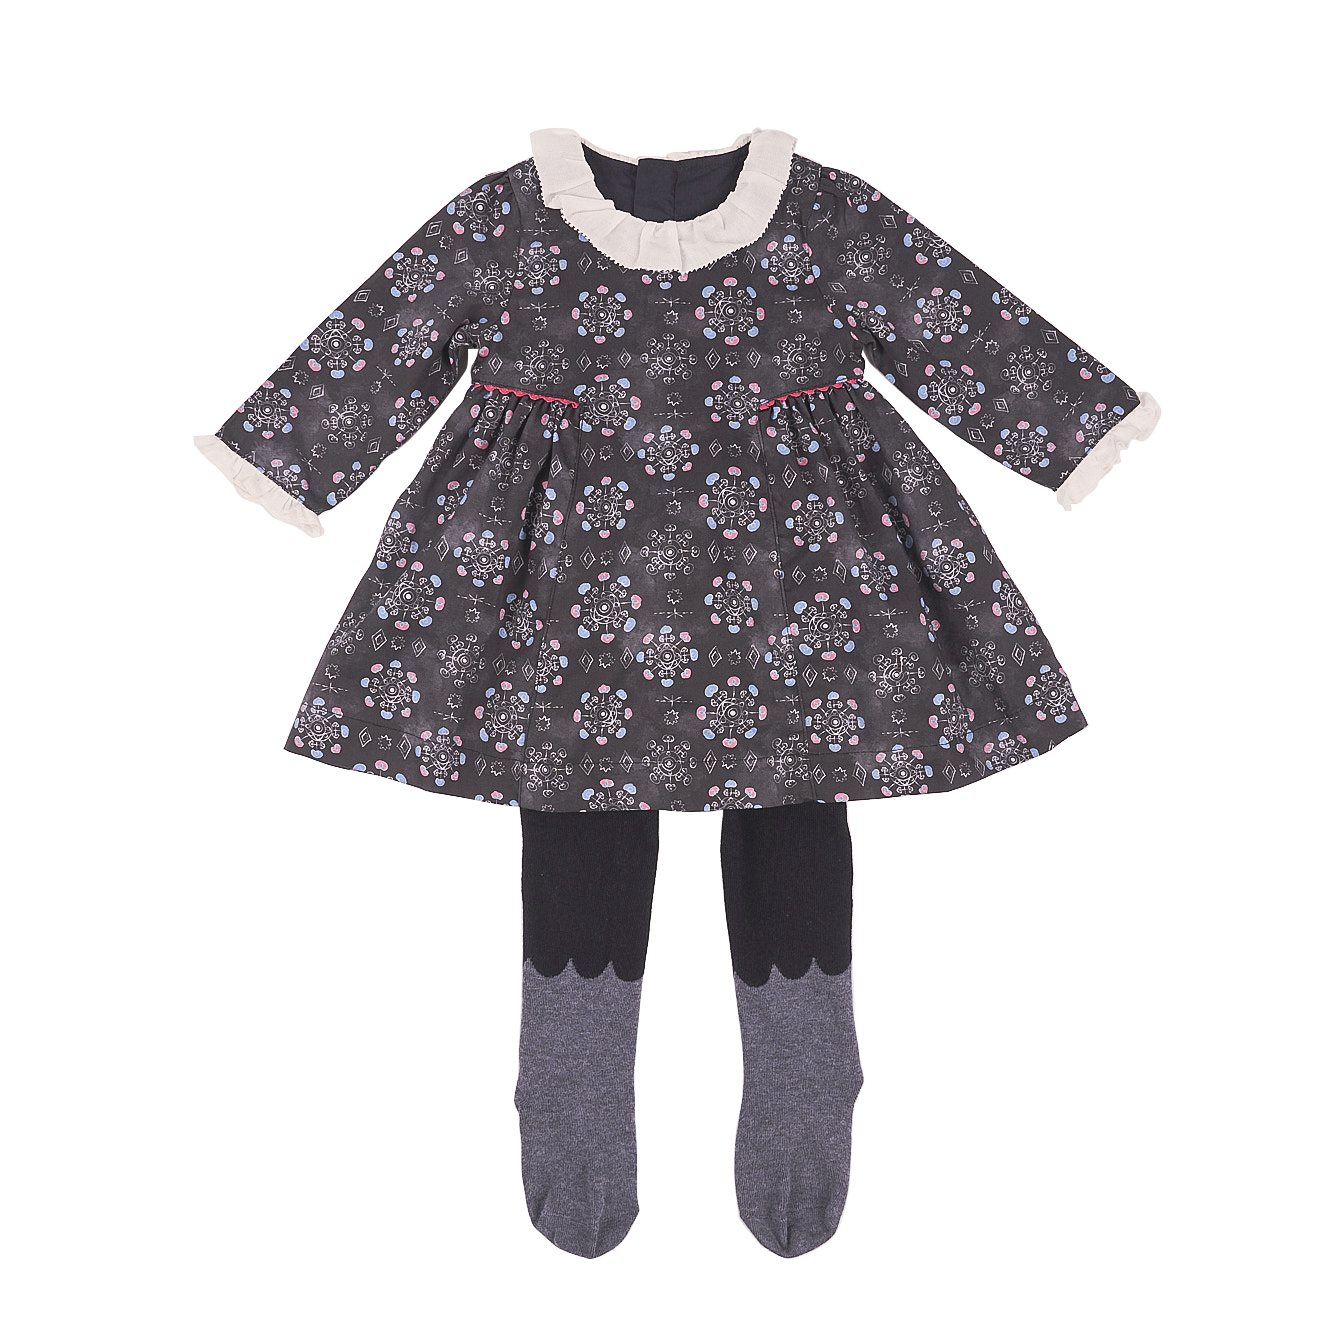 Indigo baby dress set with moonflower motif